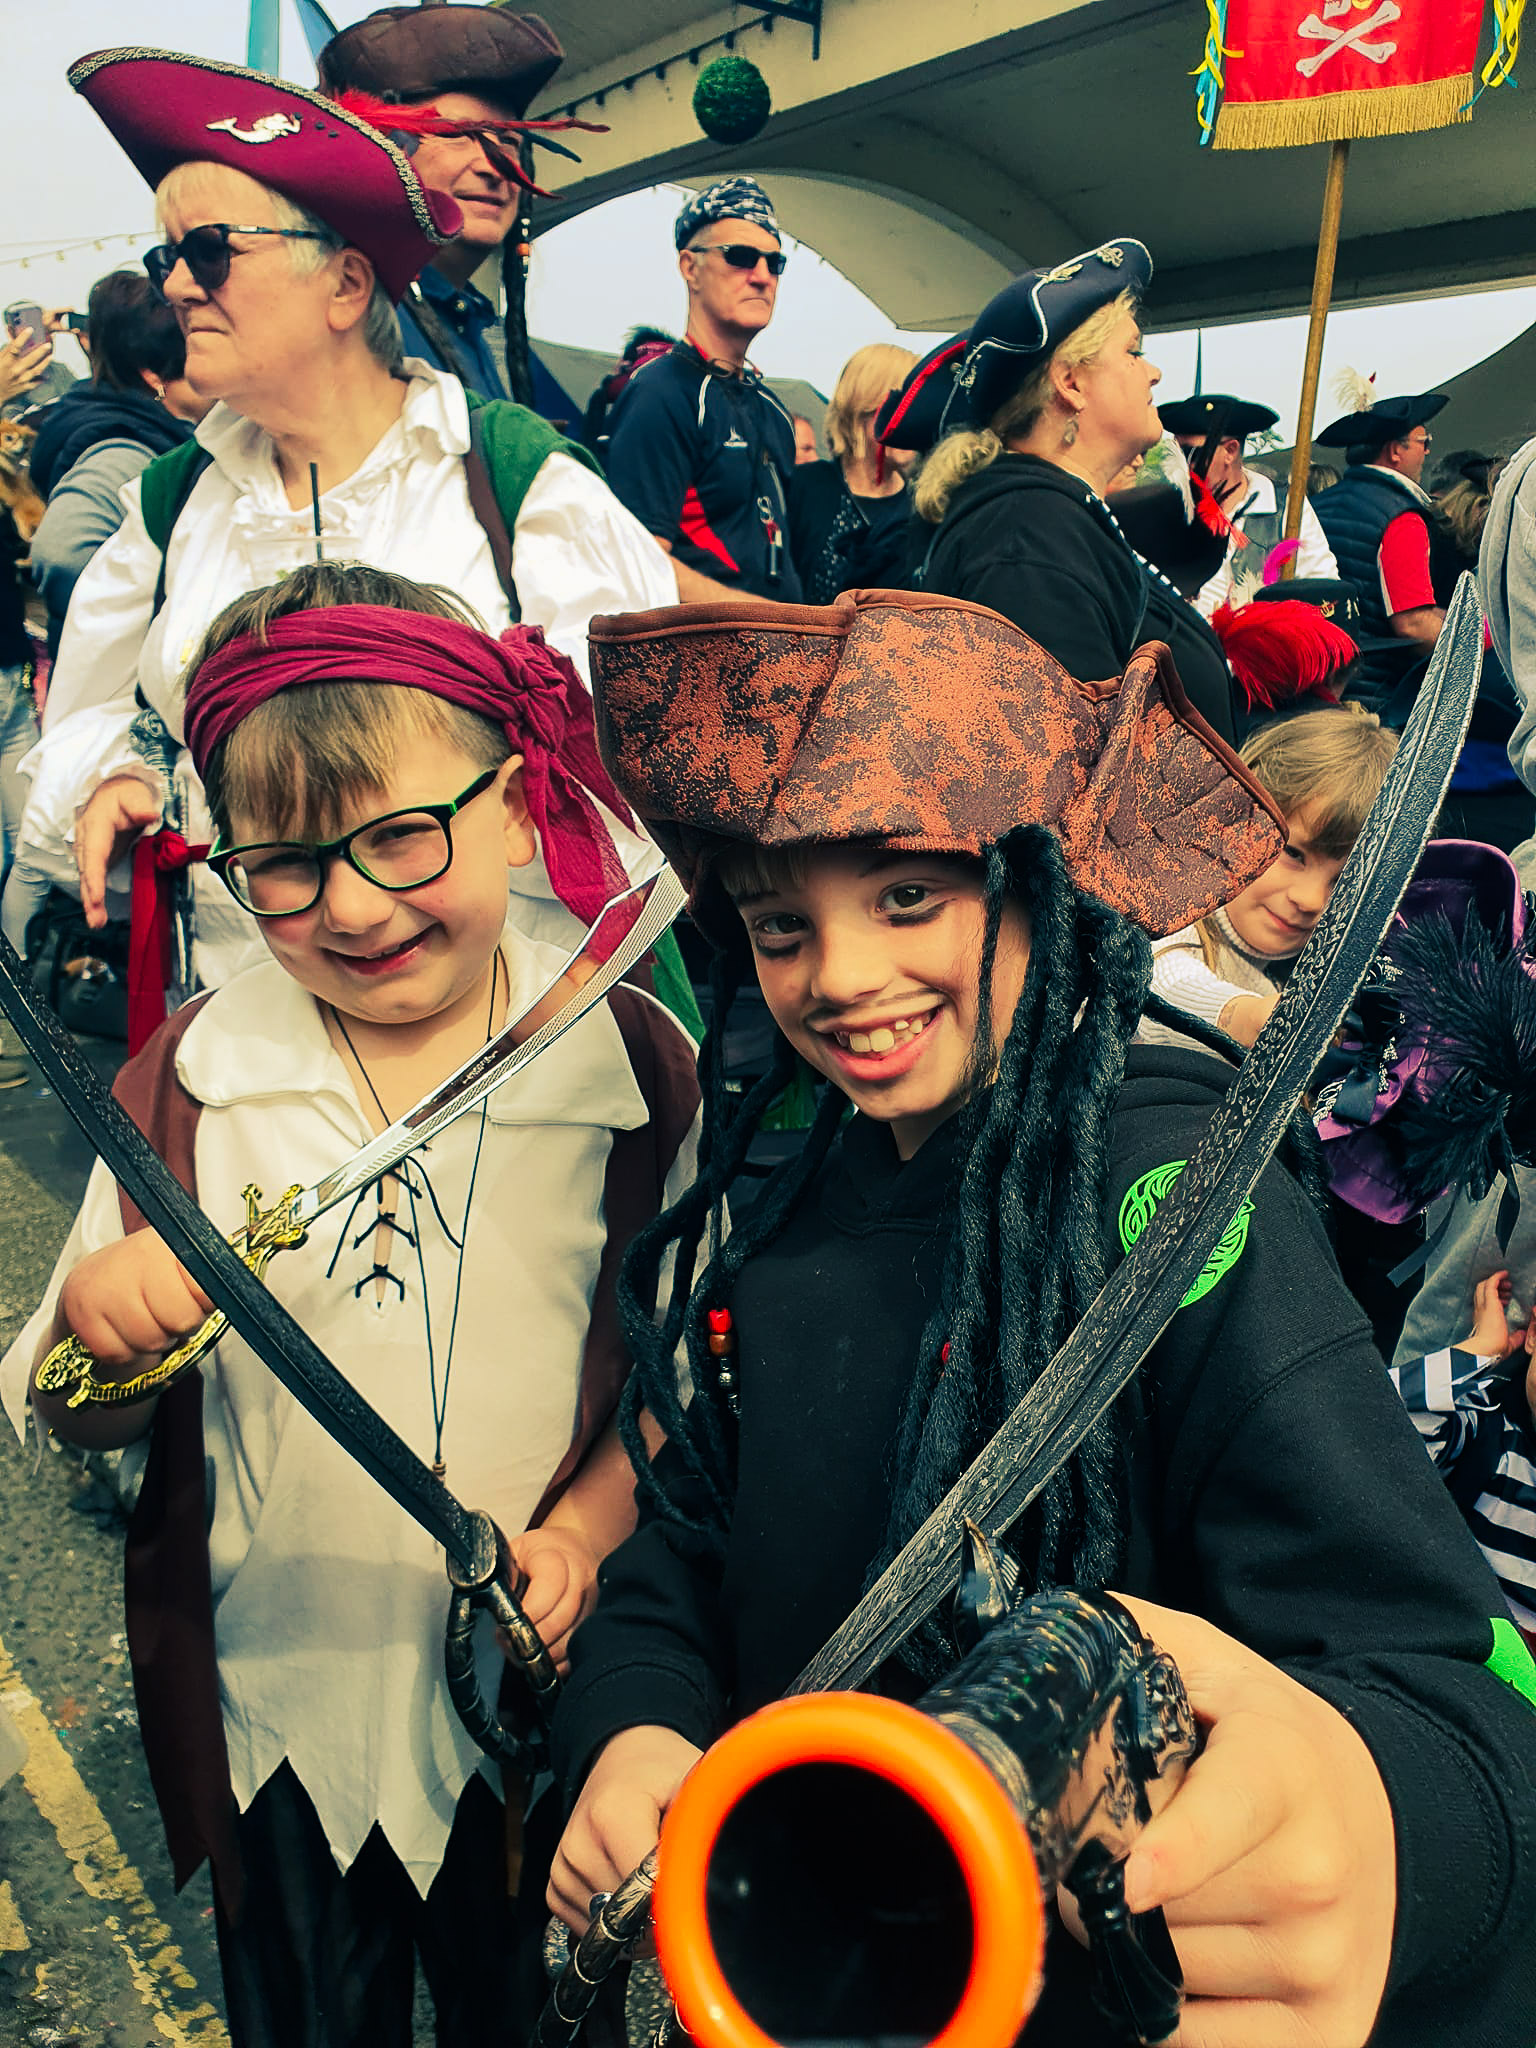 Brixham Pirate Festival Brixham Holidays